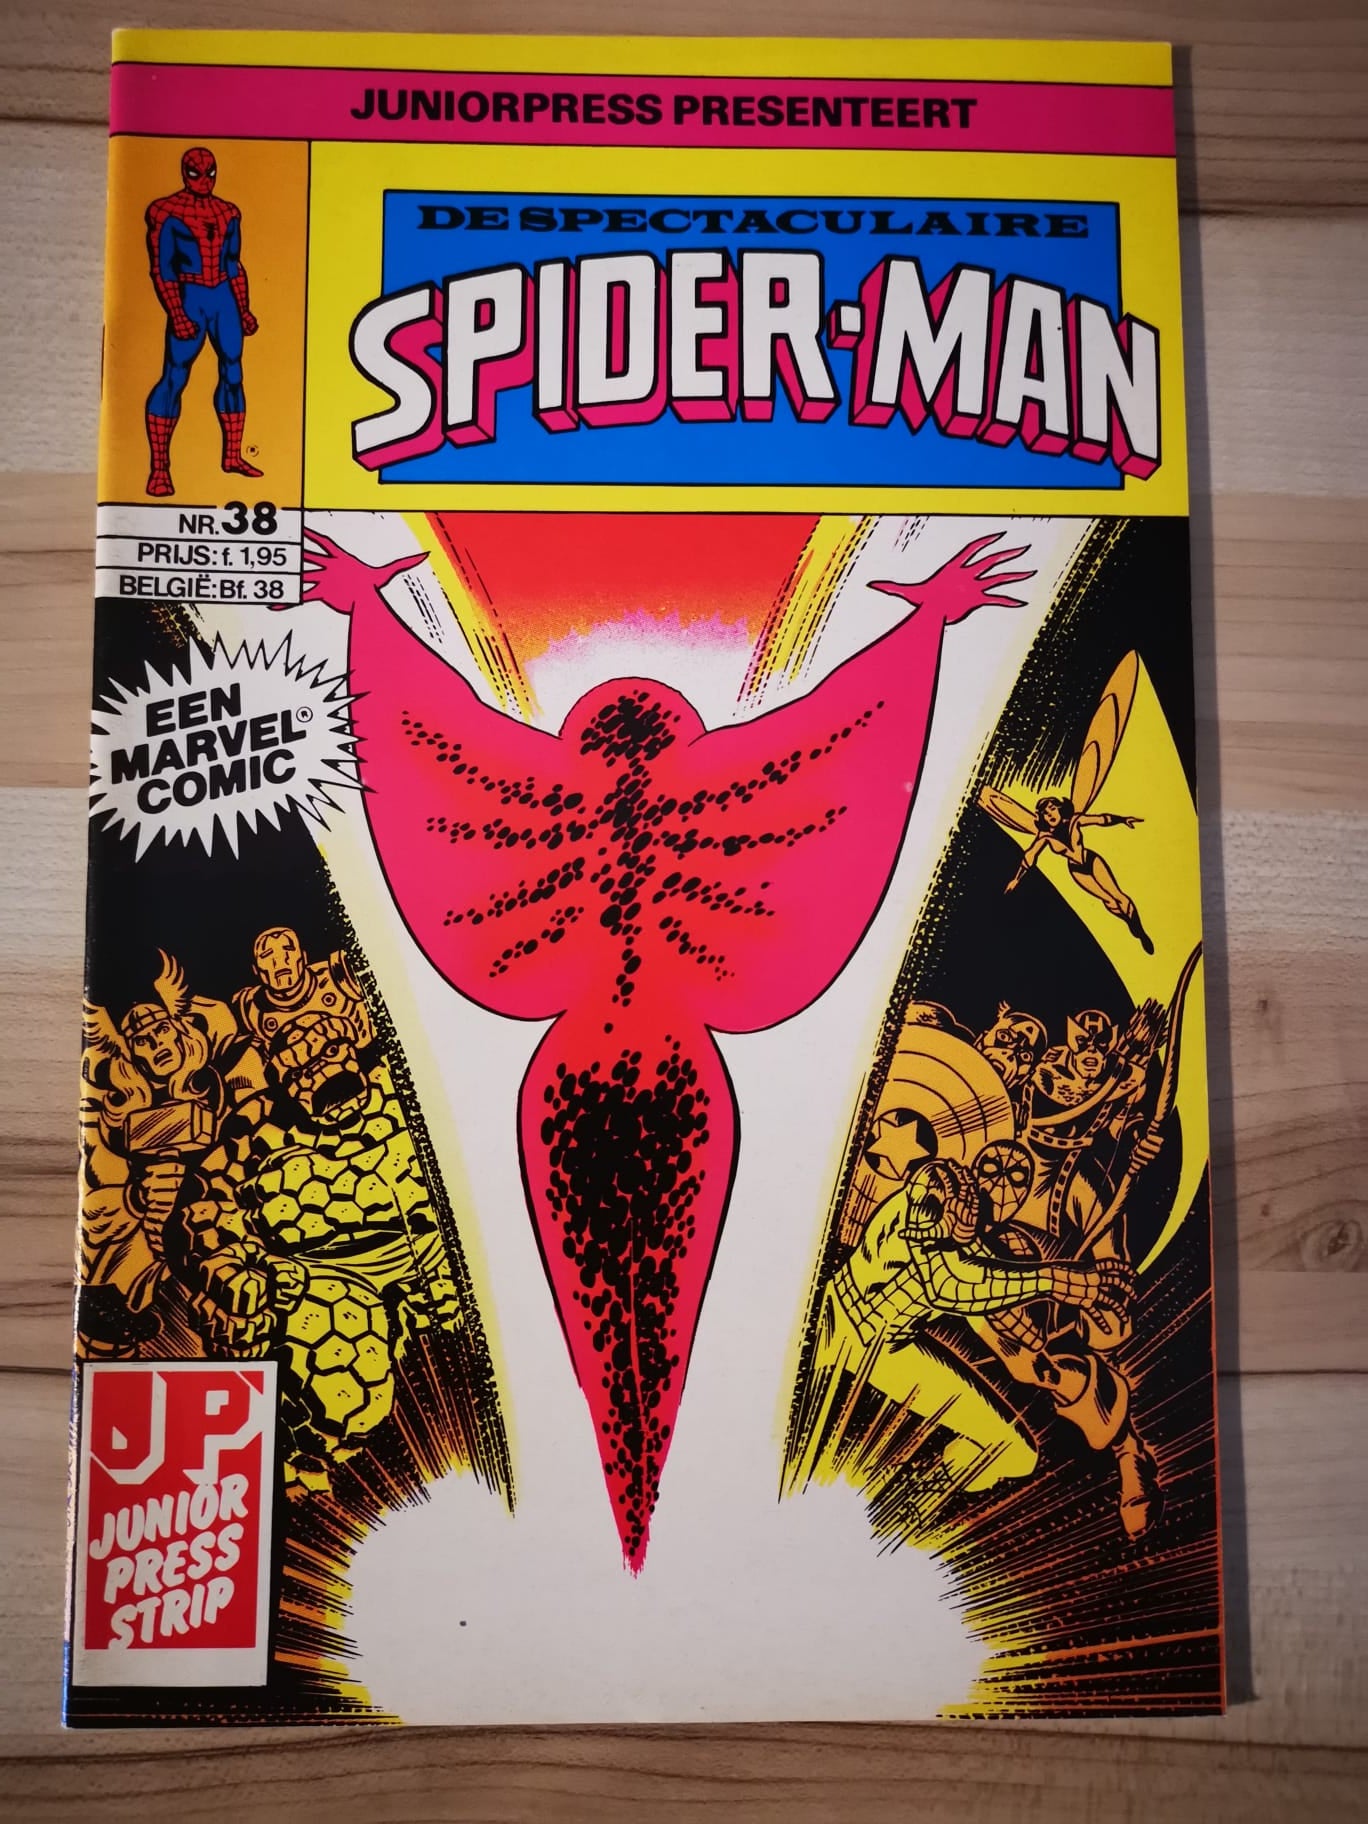 De spektakulaire spiderman #38